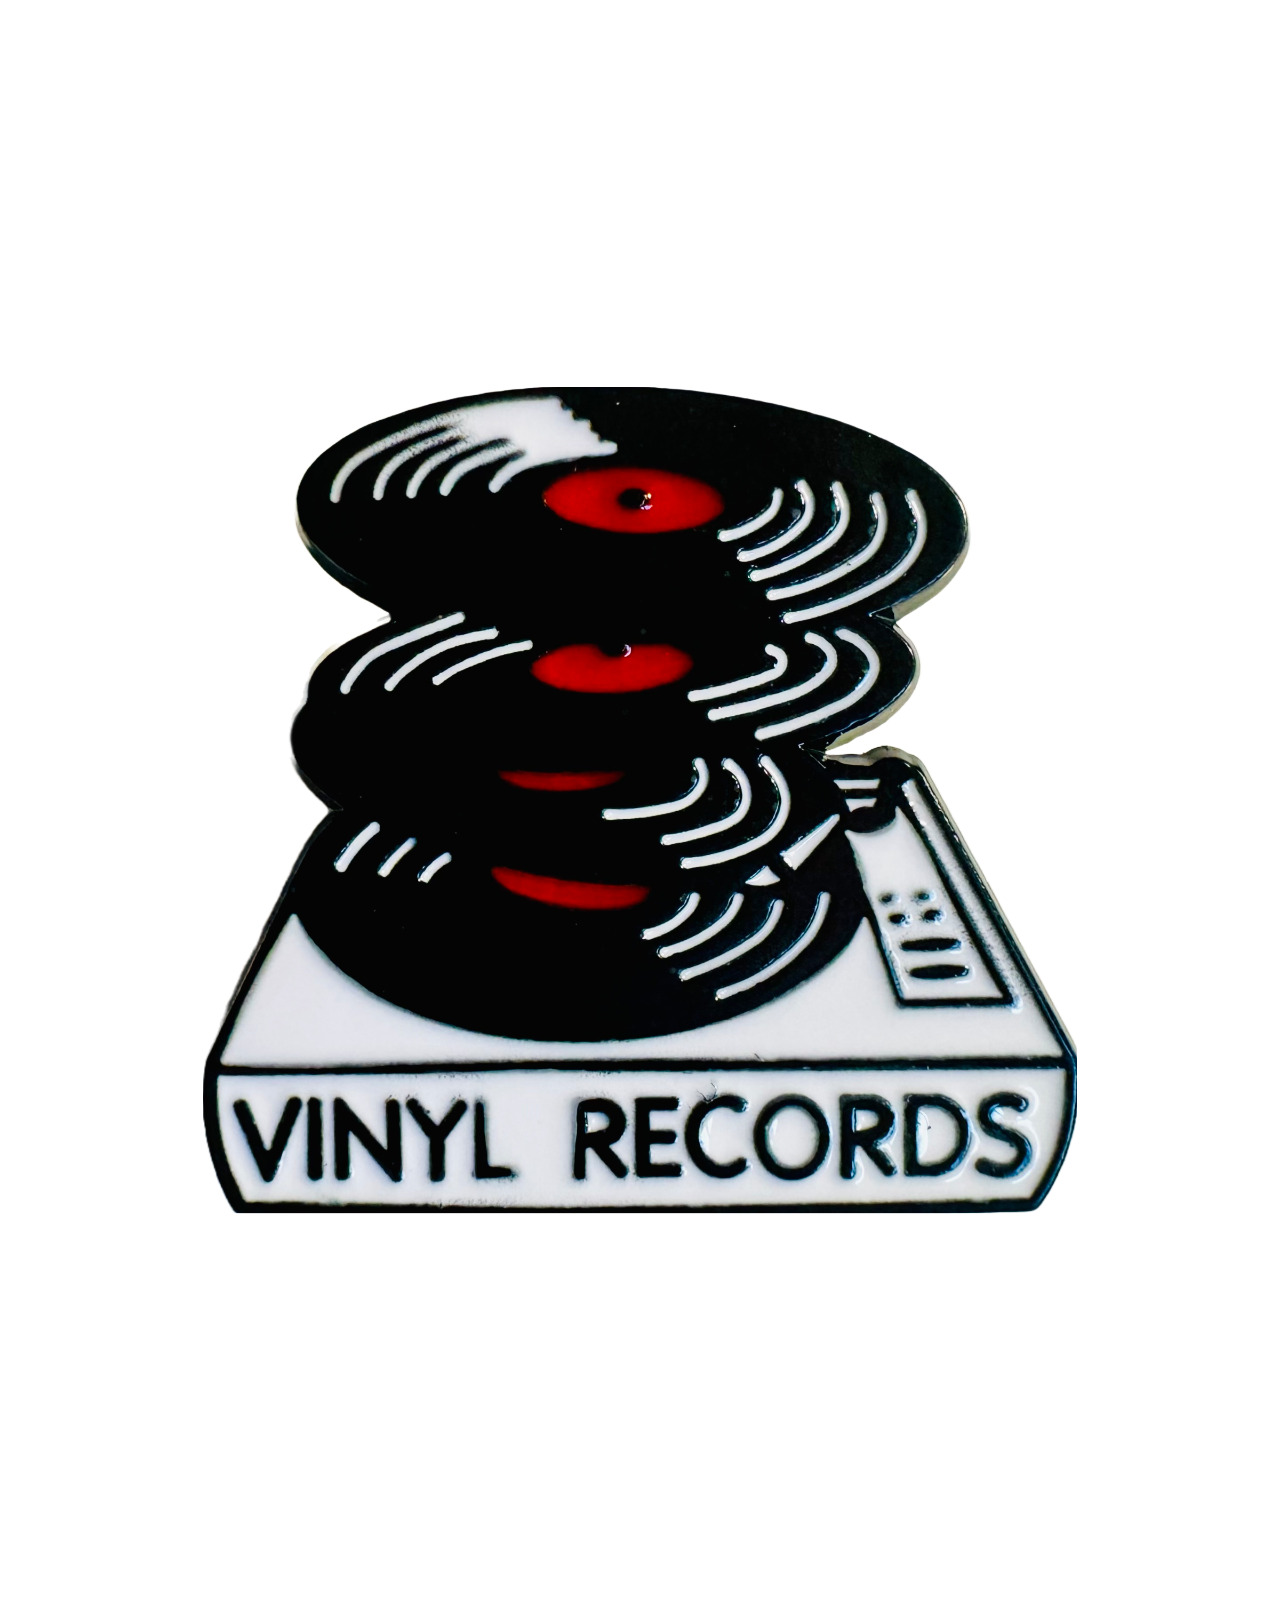 Vinyl Record enamel pin - crate digger, vinyl junkie, record collector, records